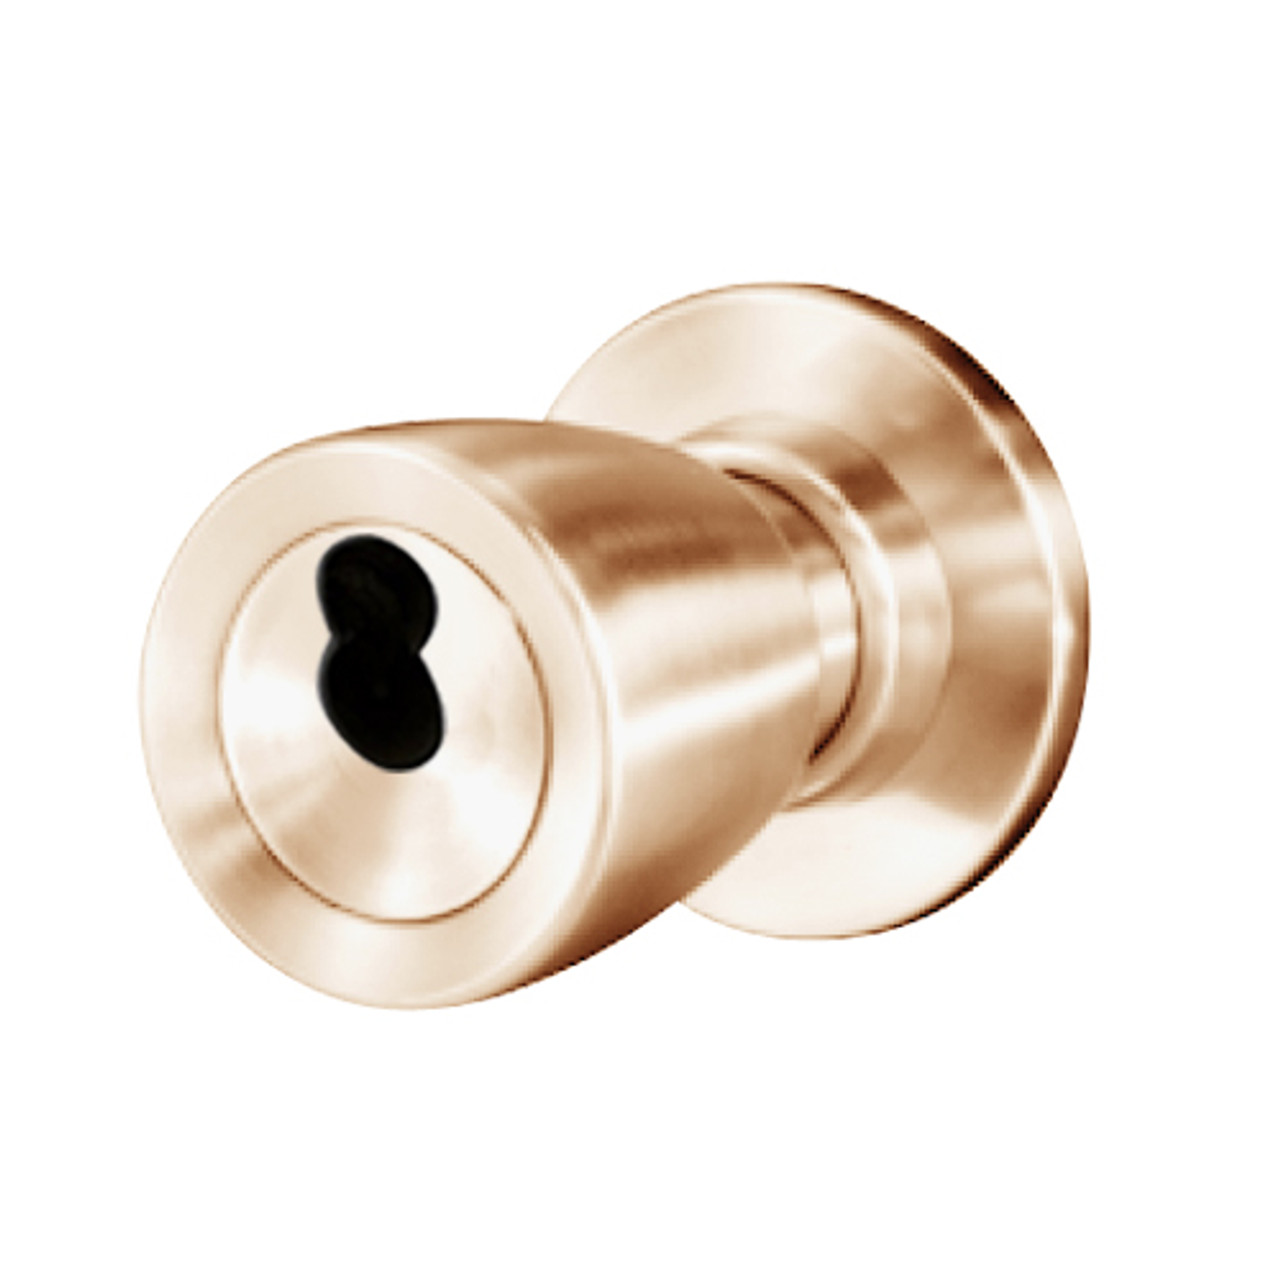 8K57YR6CS3612 Best 8K Series Exit Heavy Duty Cylindrical Knob Locks with Tulip Style in Satin Bronze